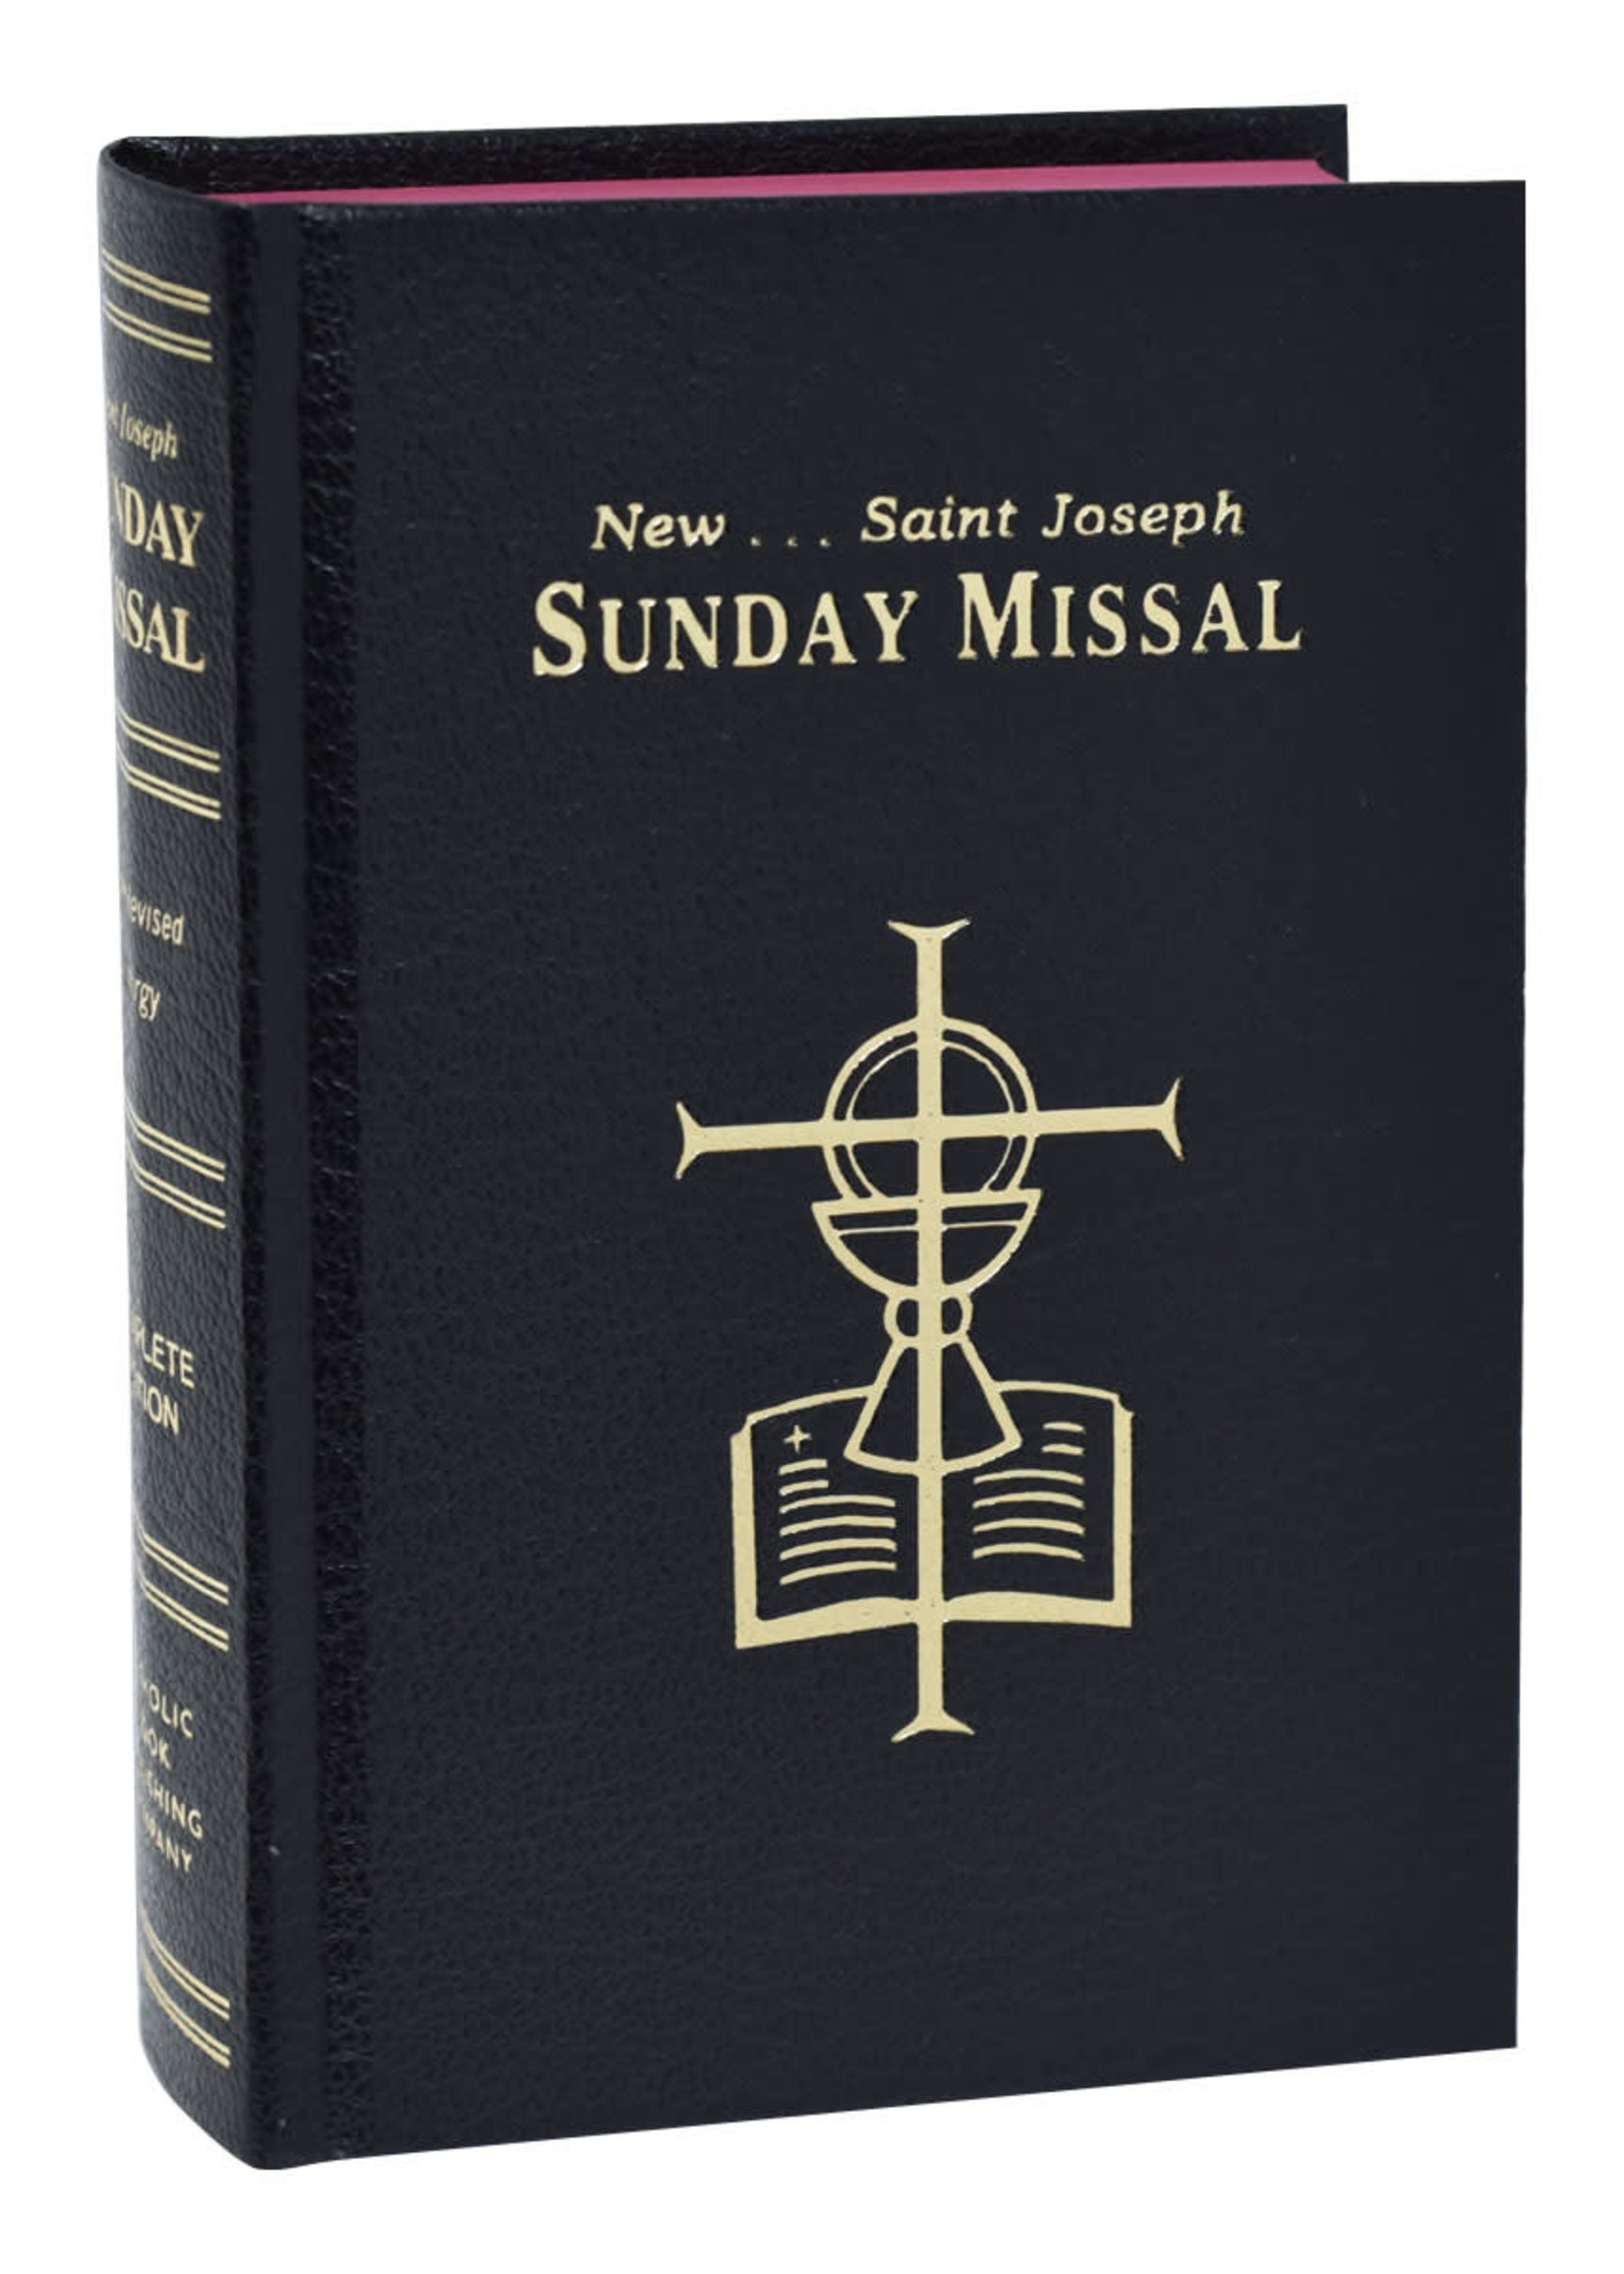 St Joseph Sunday Missal - black hardcover